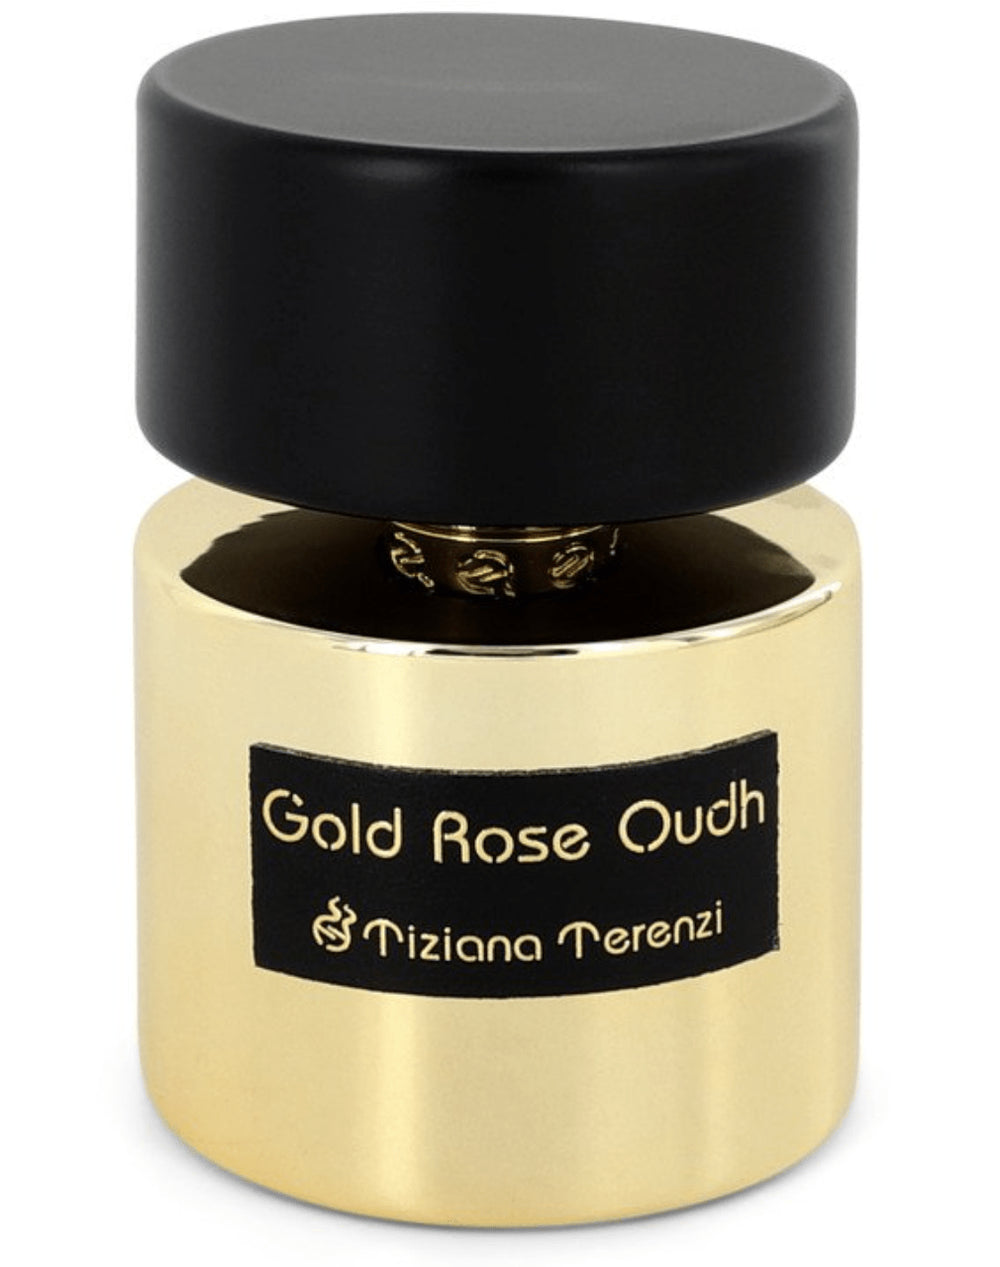 Gold Rose Oudh by Tiziana Terenzi